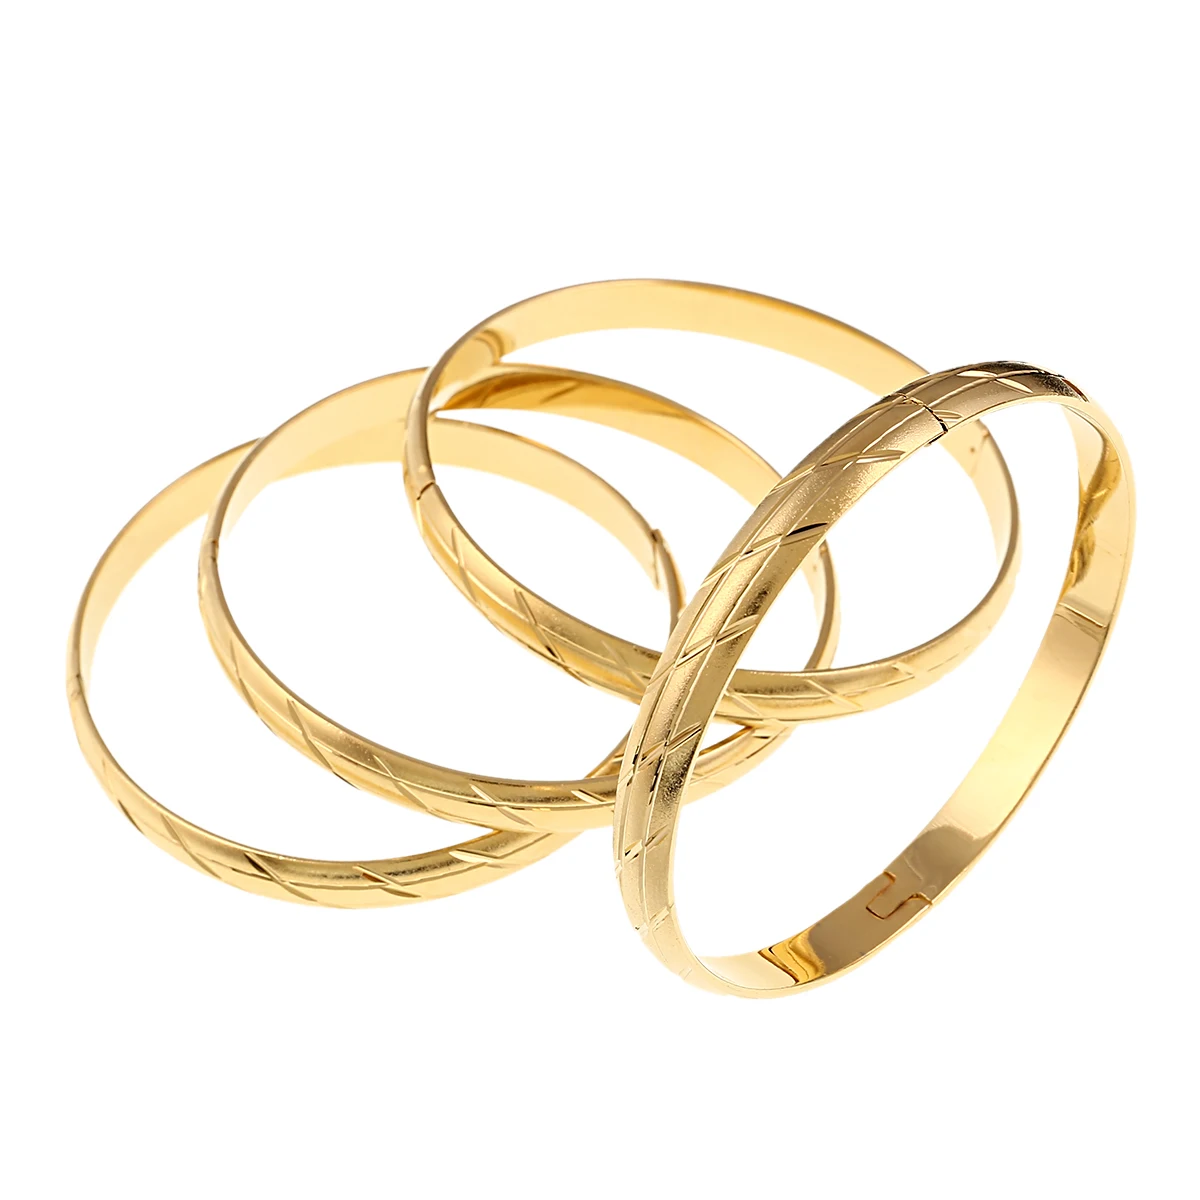 

4PCS Dubai Gold Jewelry For Ethiopian Cuff Bracelets Wedding Bridal Women Men Girls Openable Bangles Gift